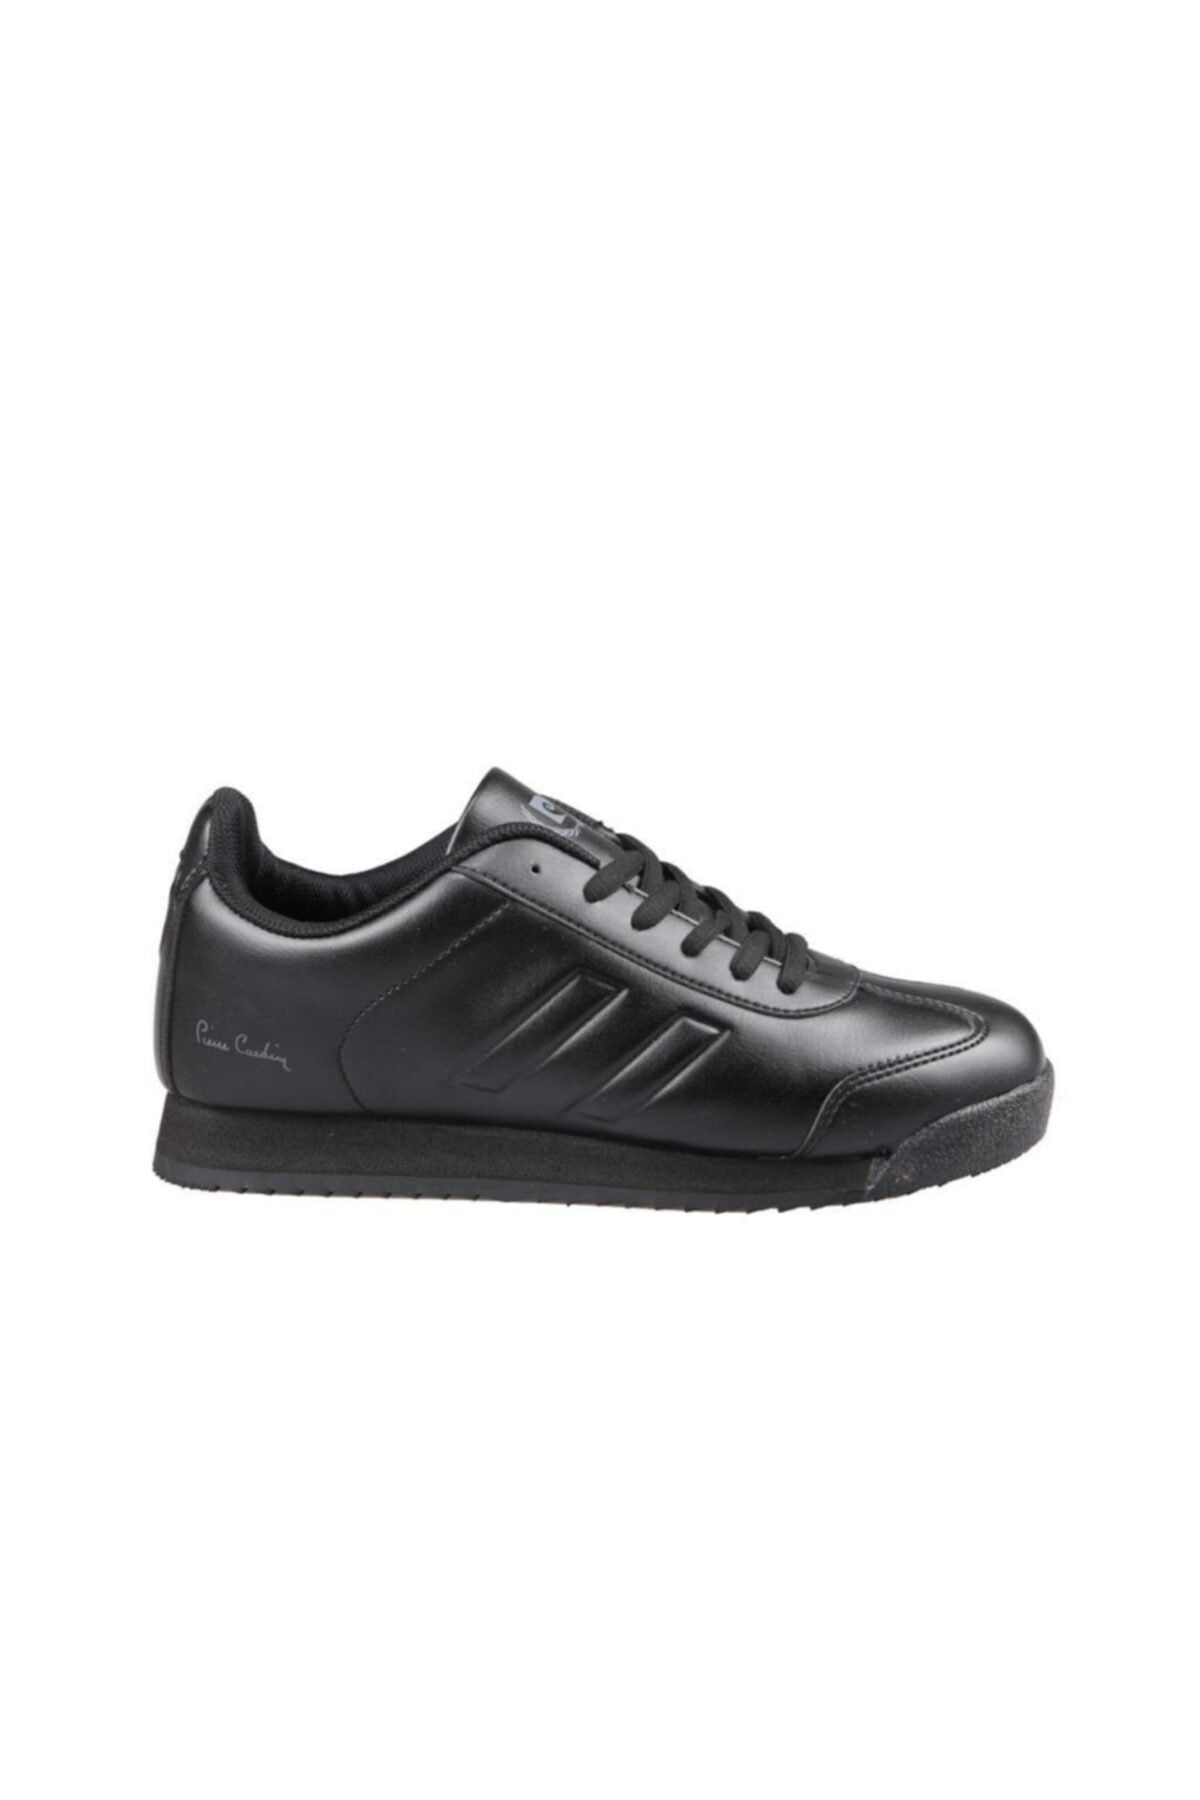 Pierre Cardin Pc-30488 Siyah Unisex Sneakers